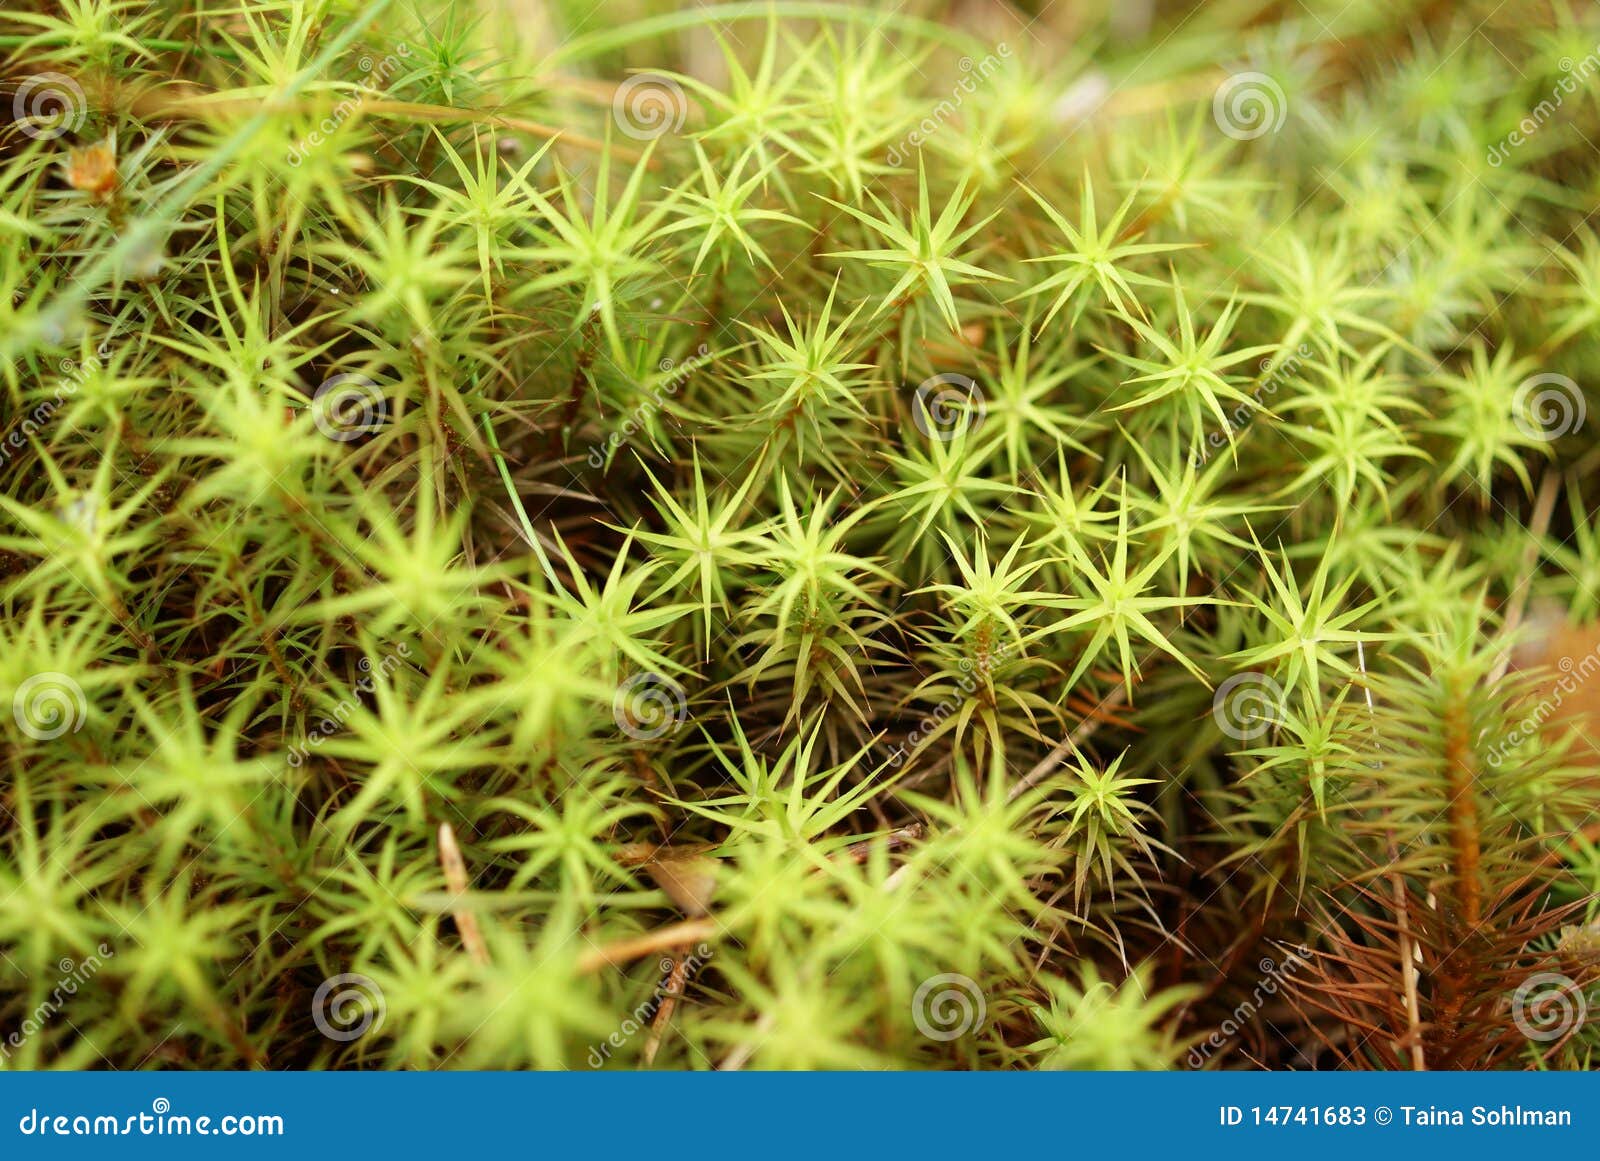 green moss macro (polytrichum commune)